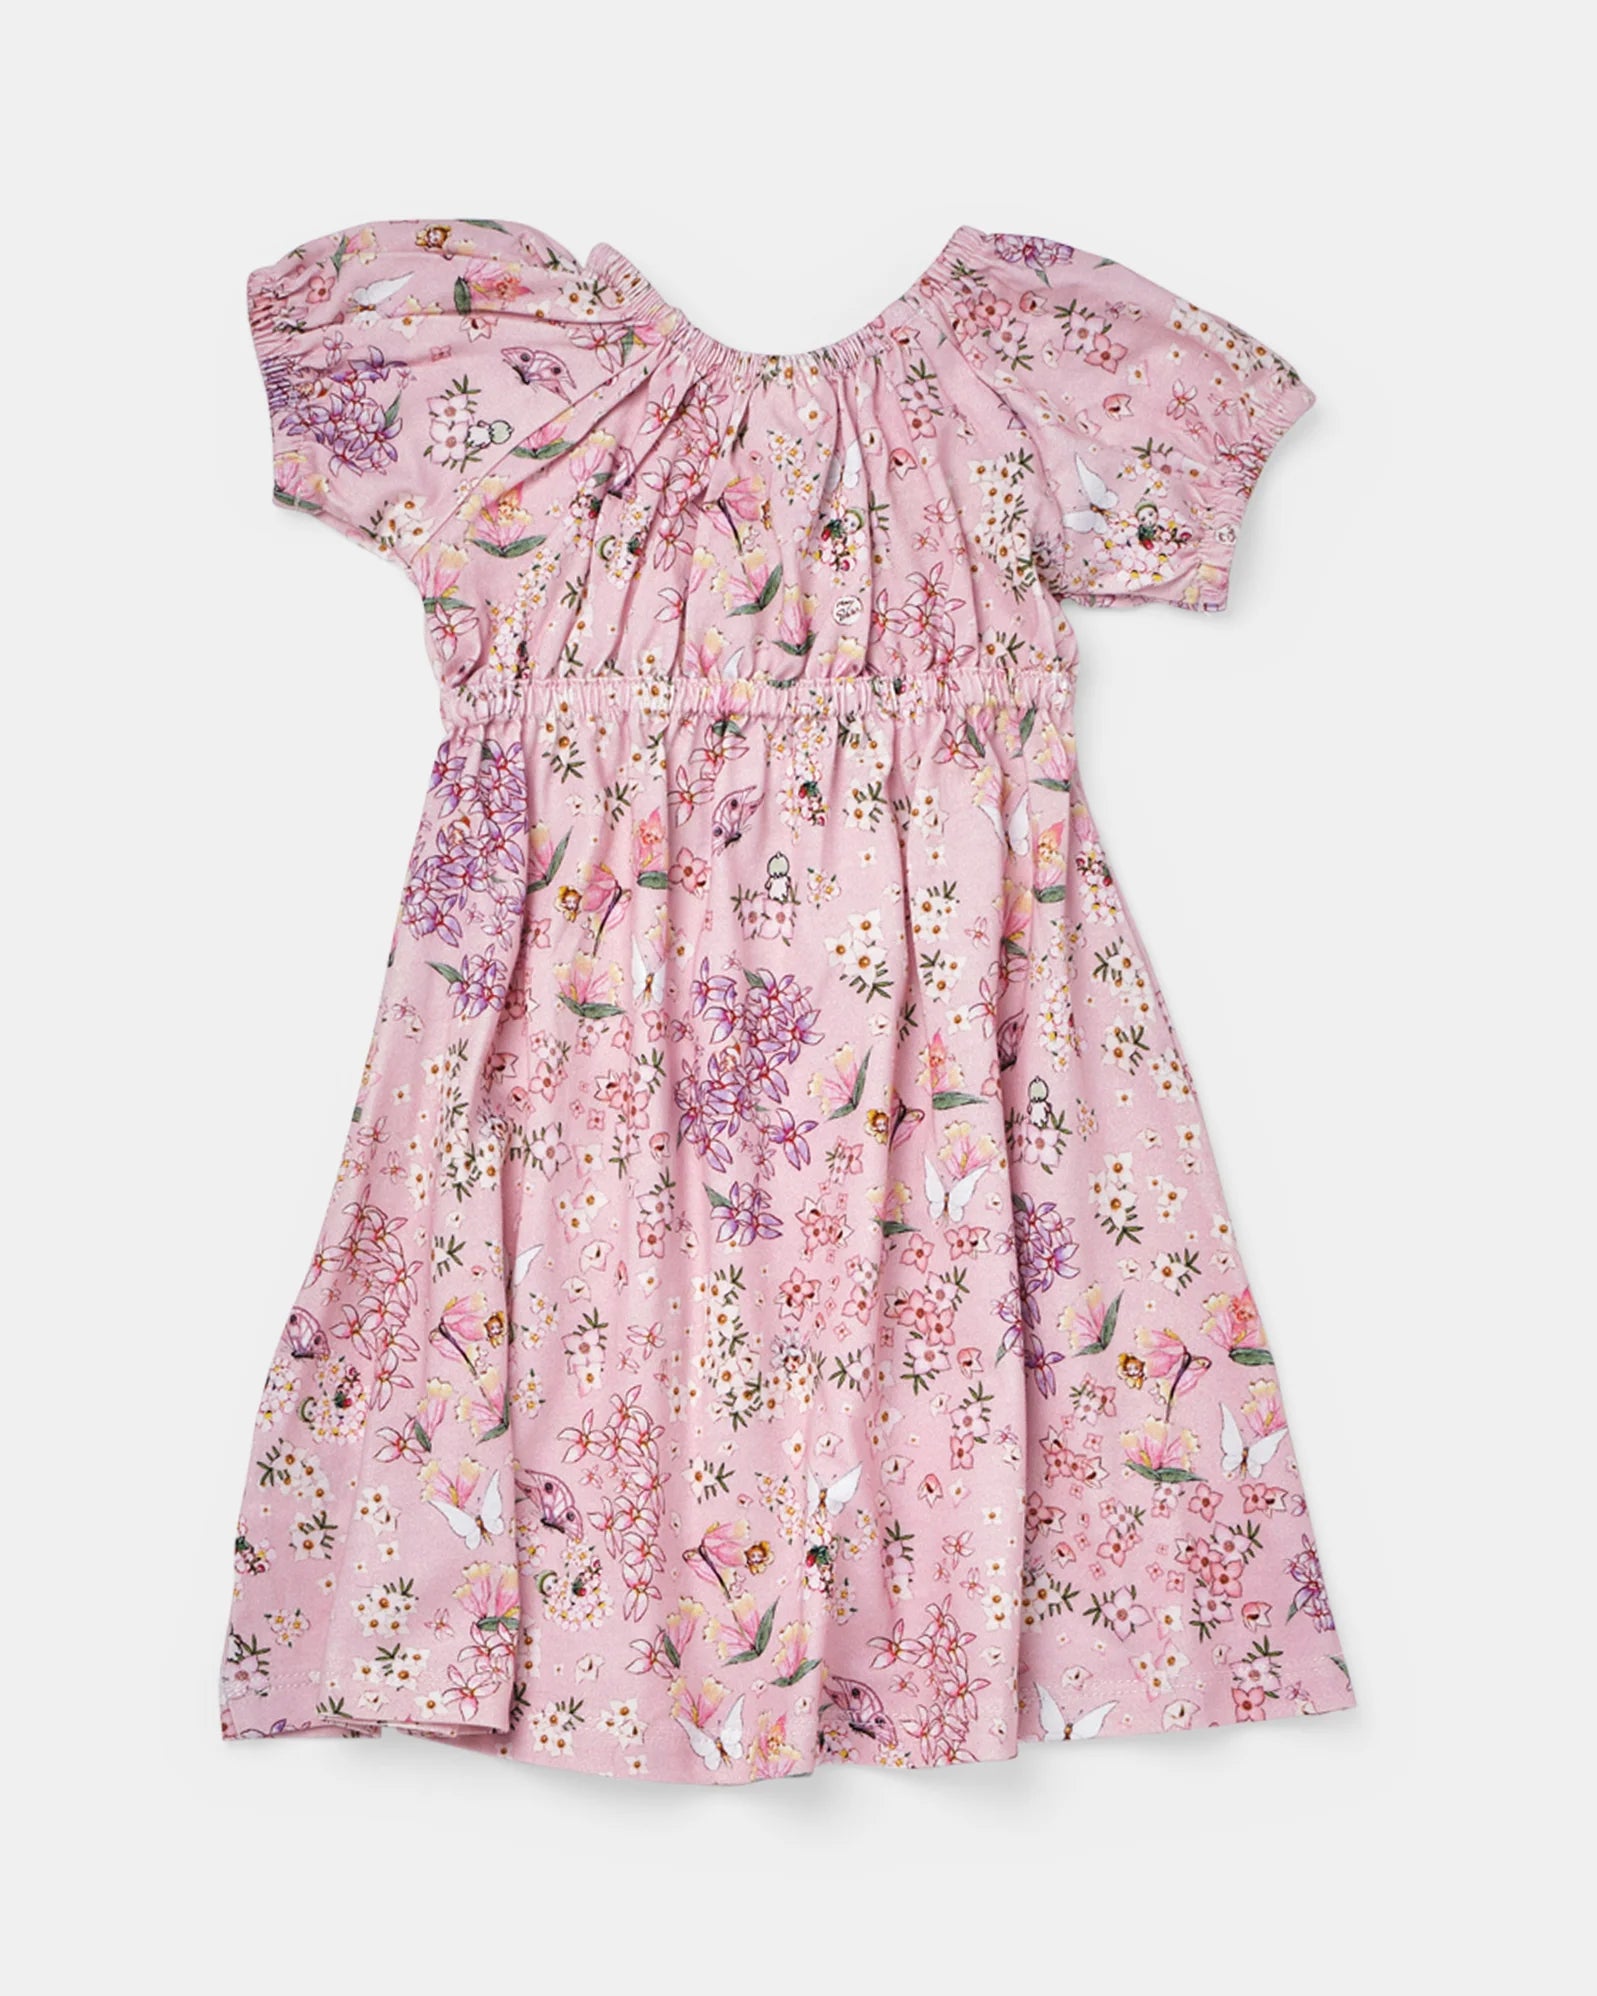 Walnut Baby - May Gibbs Hallie Dress - Pink Flora